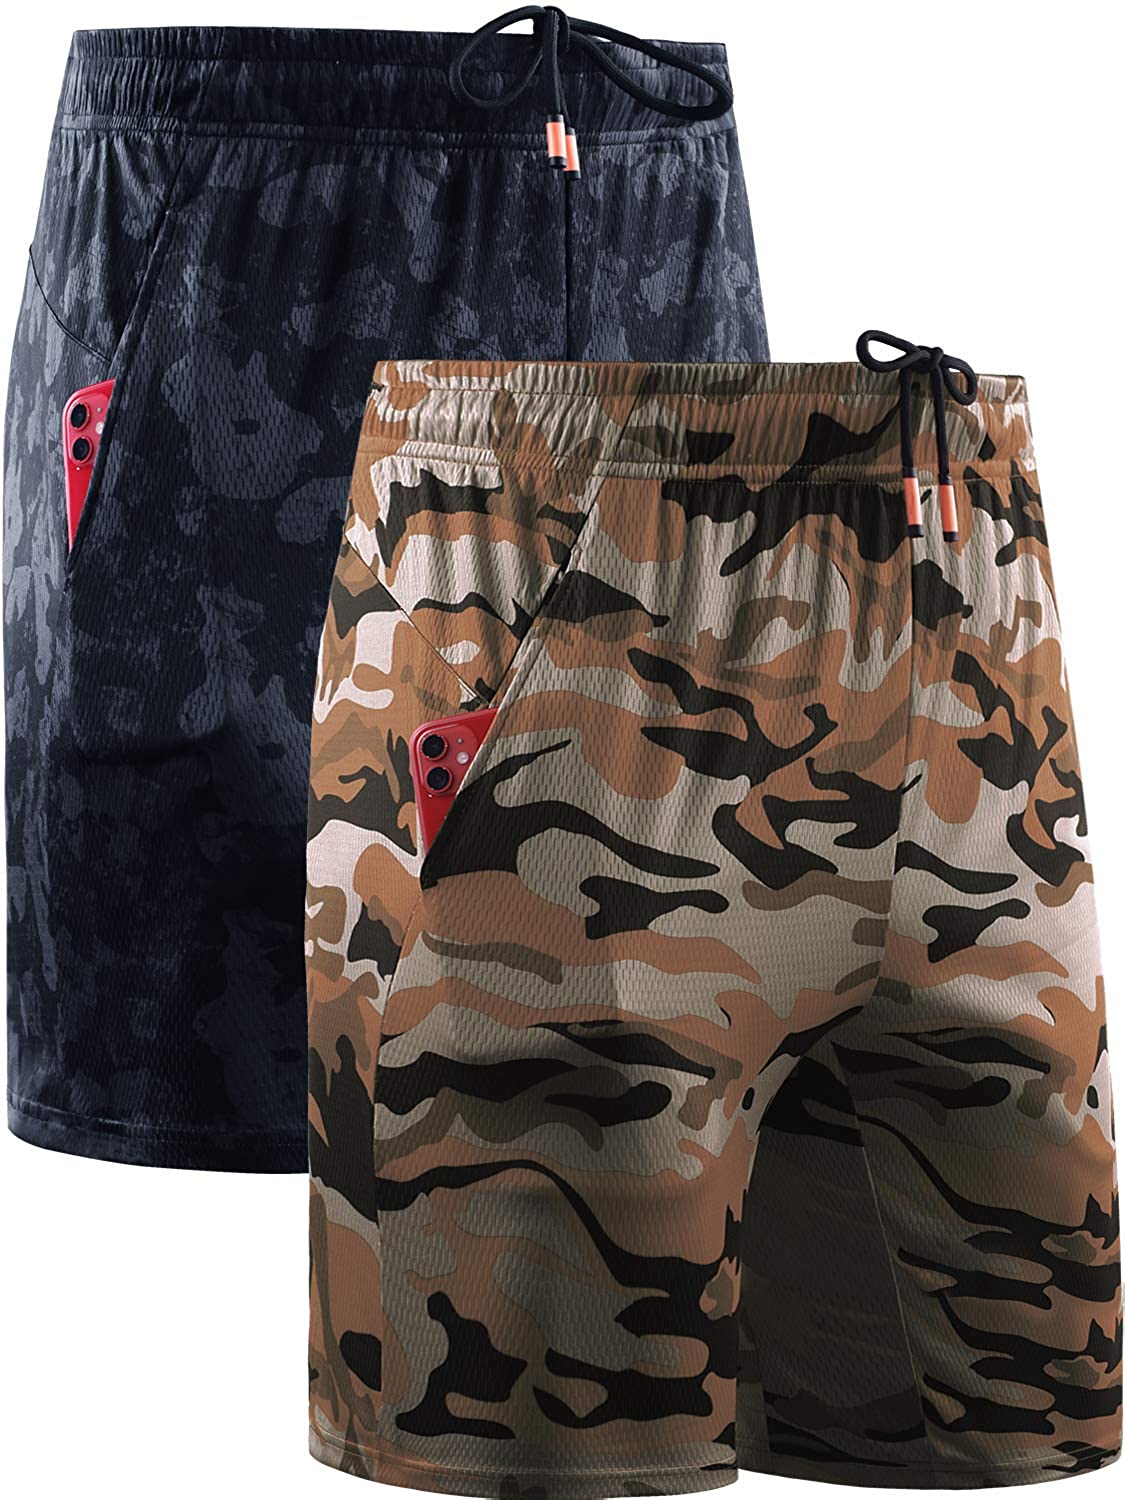 Cadmus Mens 7 Mesh Running Workout Shorts with Pockets